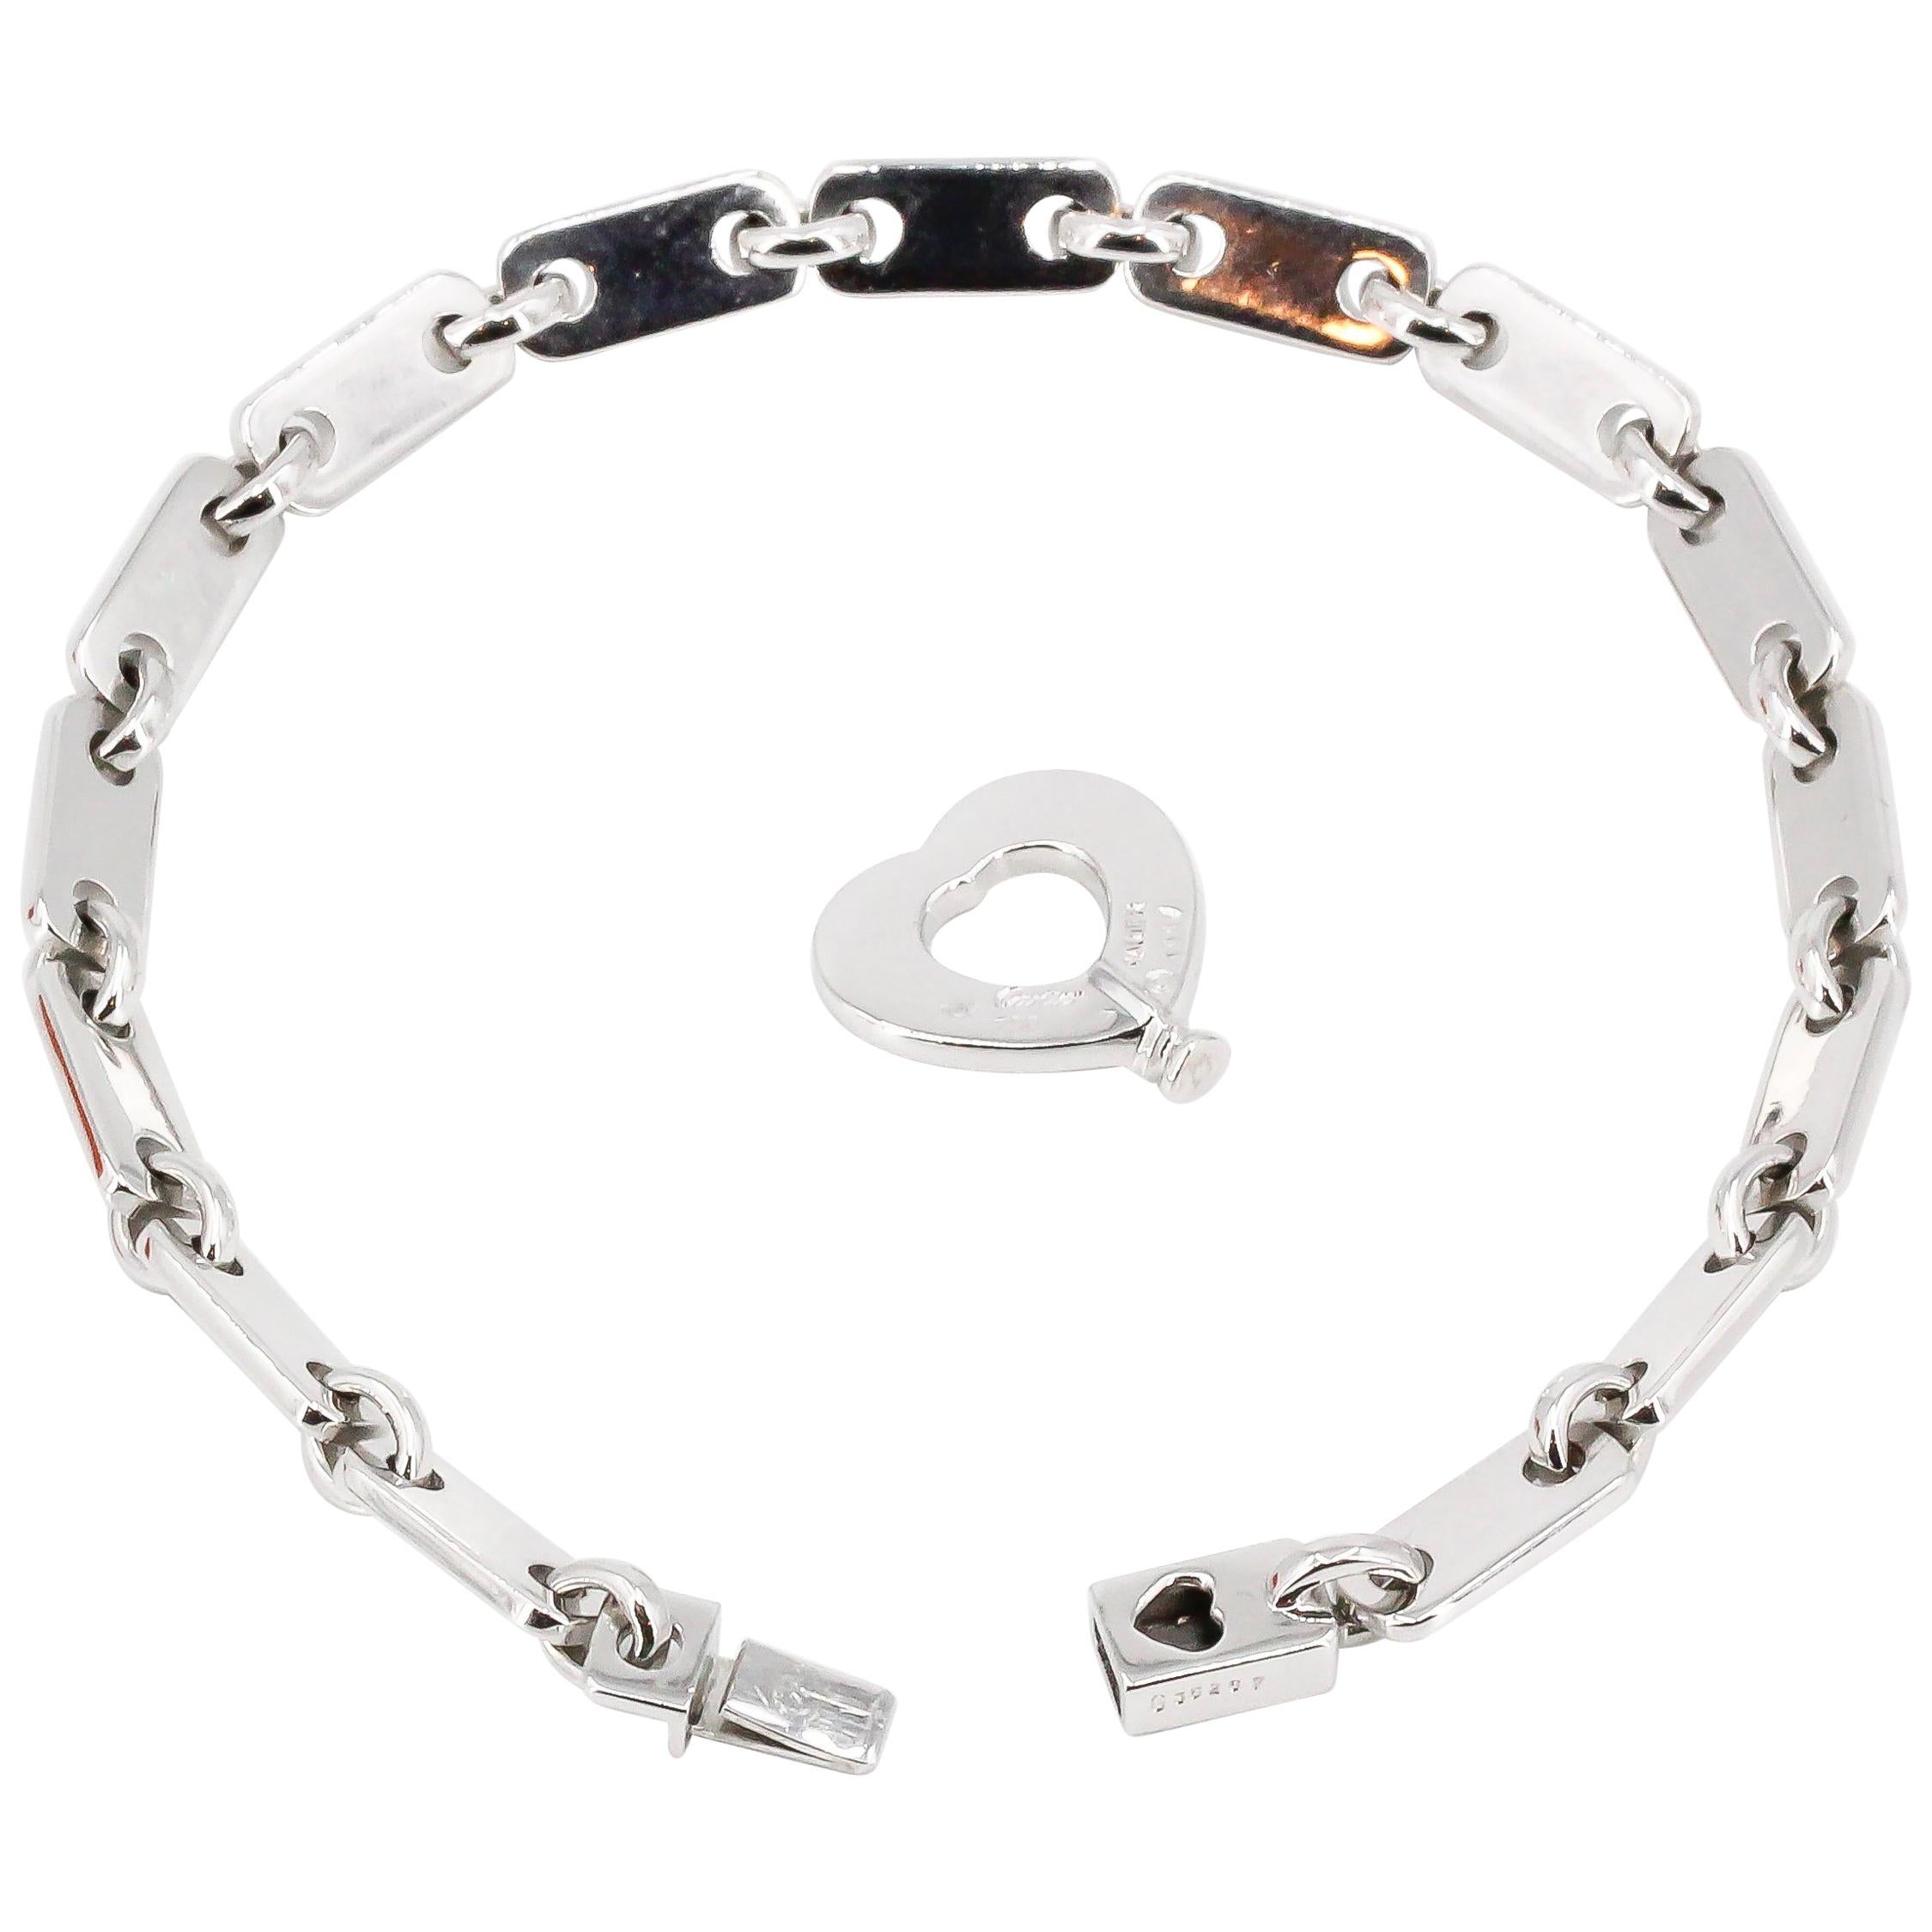 Cartier 18 Karat White Gold Lock and Key Link Bracelet for Charms